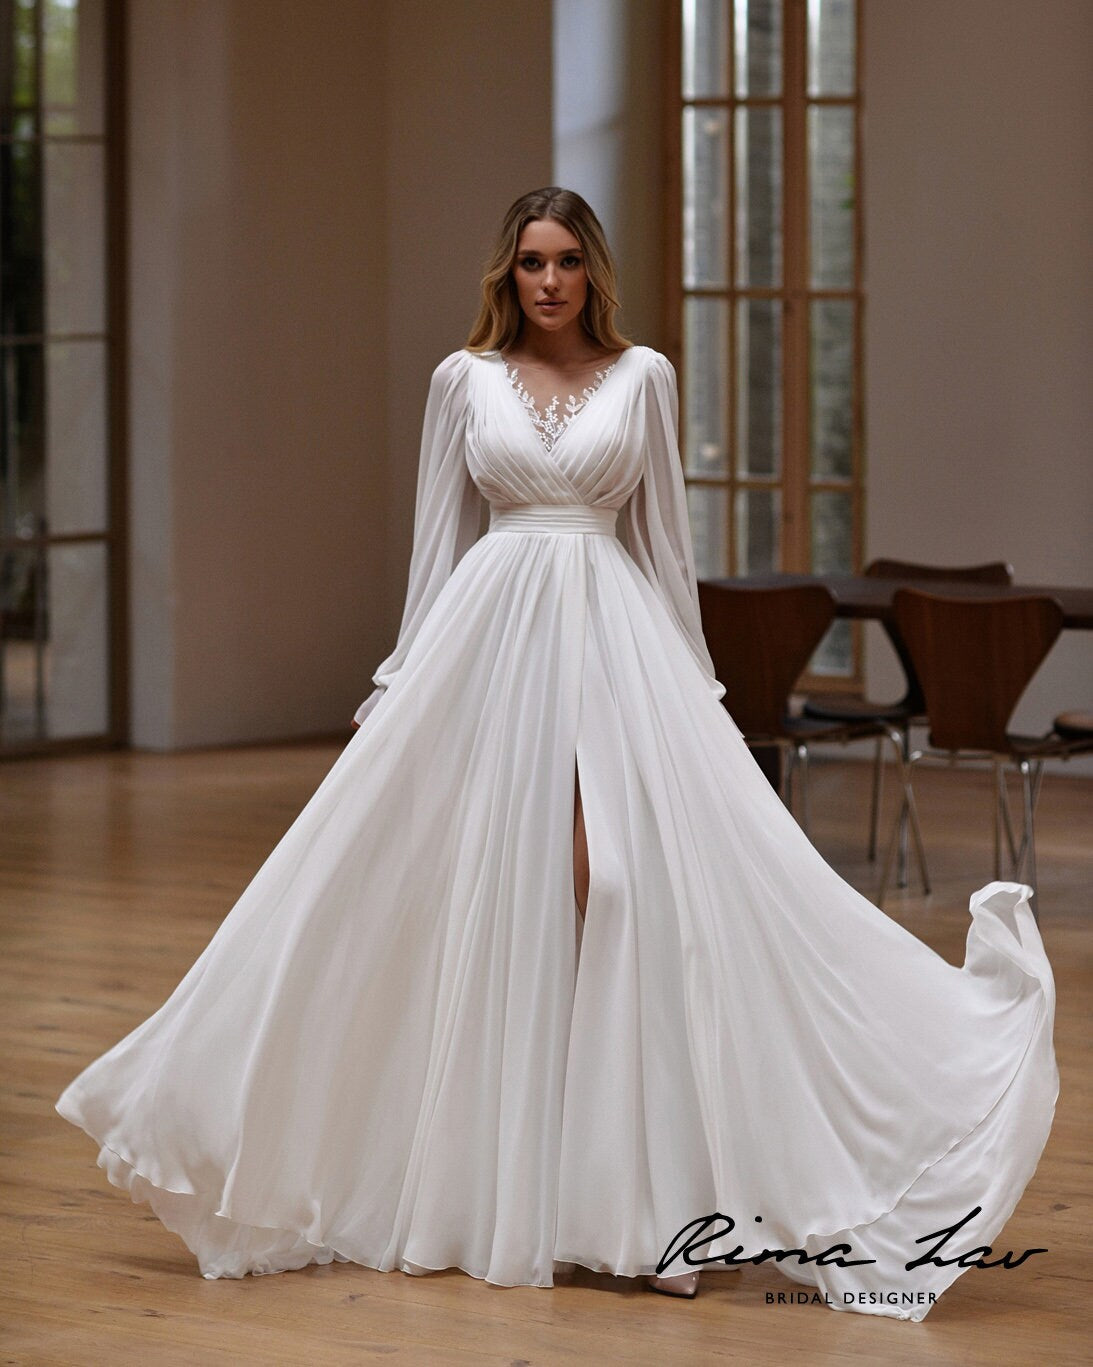 Amazing Wedding Dresses from Around the World